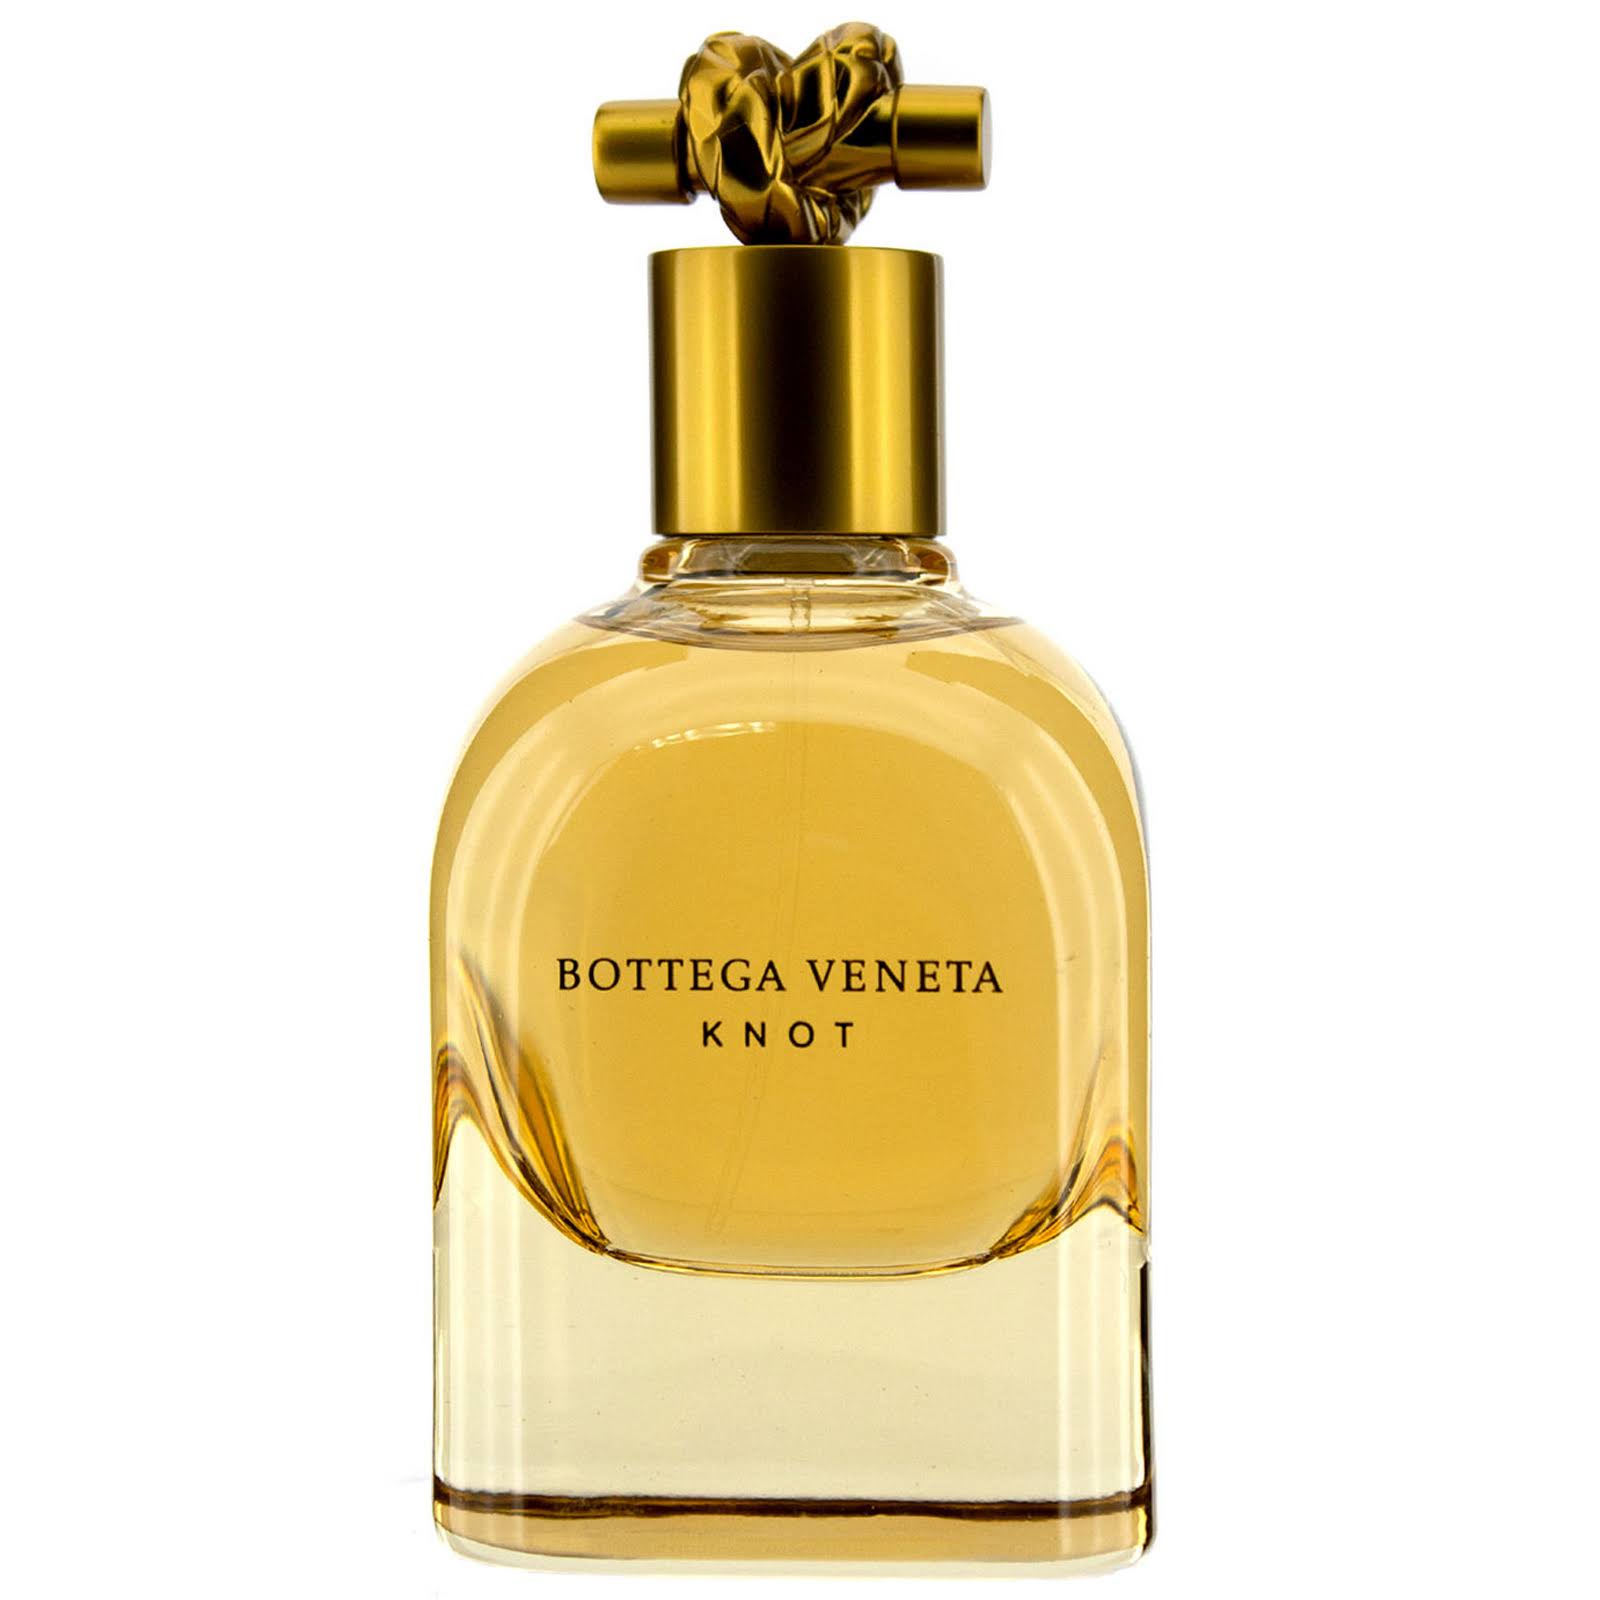 Woda perfumowana Bottega Veneta Knot 75ml wycofany zapach